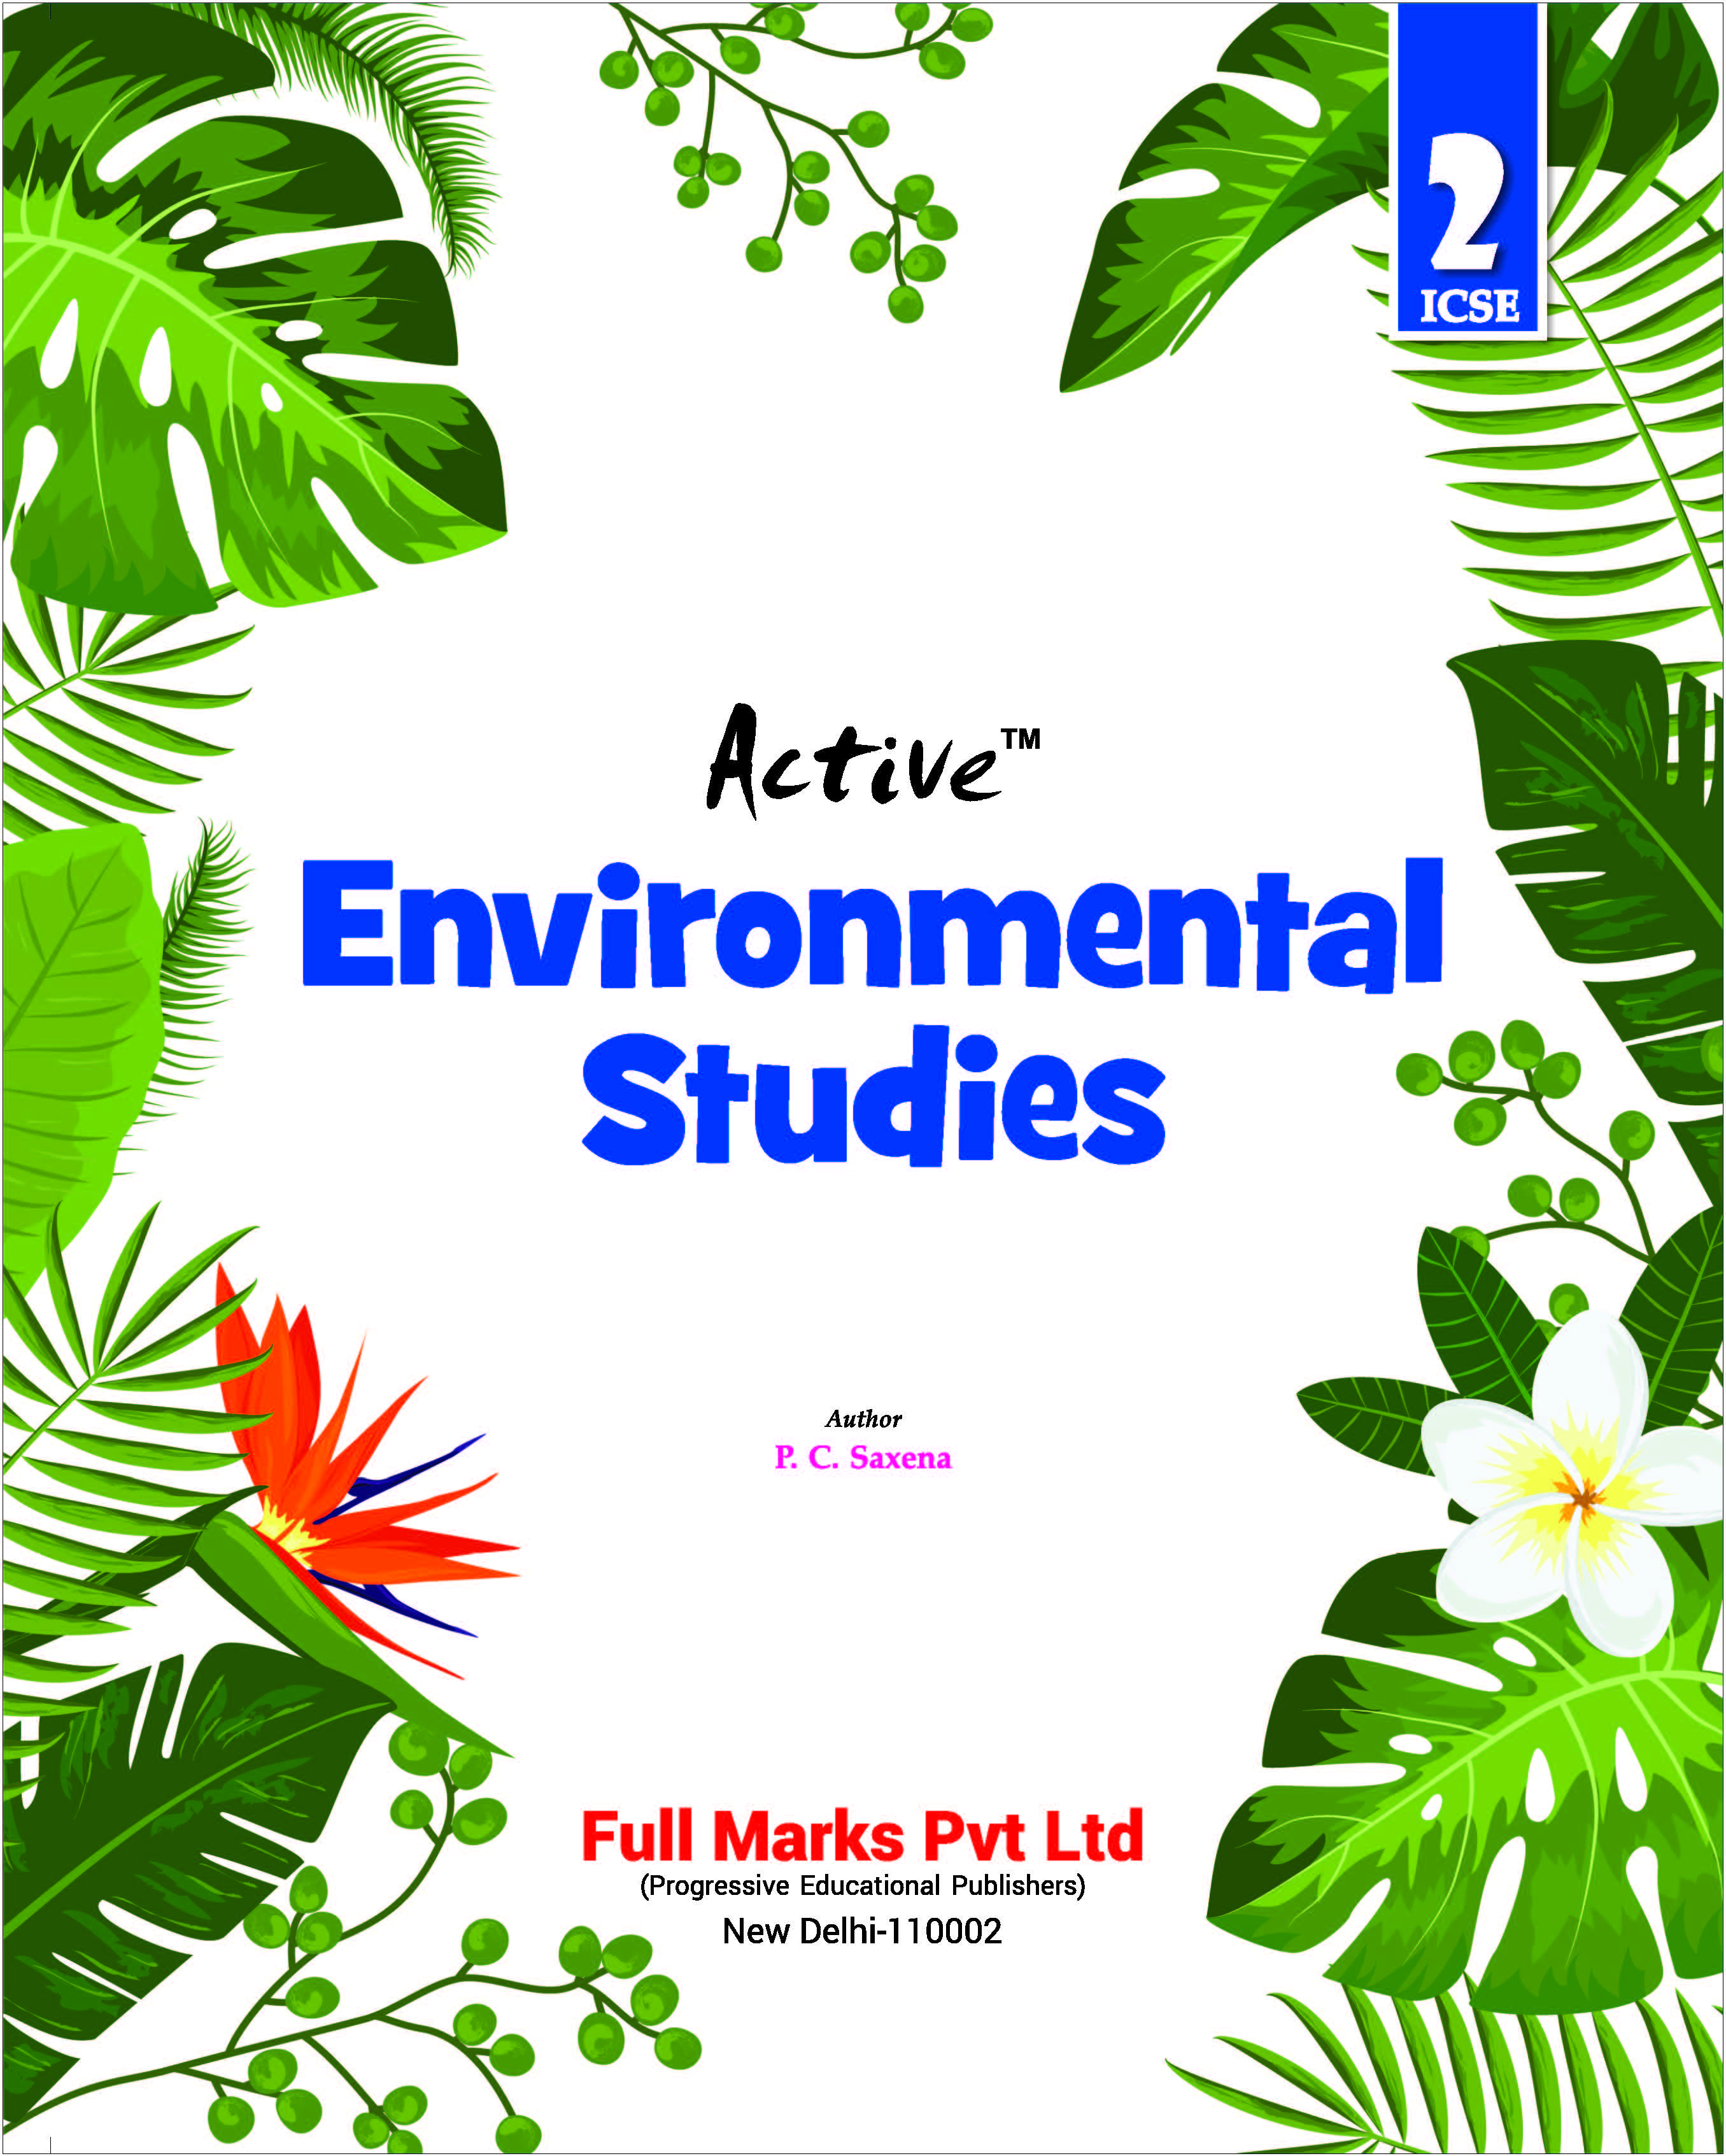 Active Environmental Studies (ICSE Board) Class 2